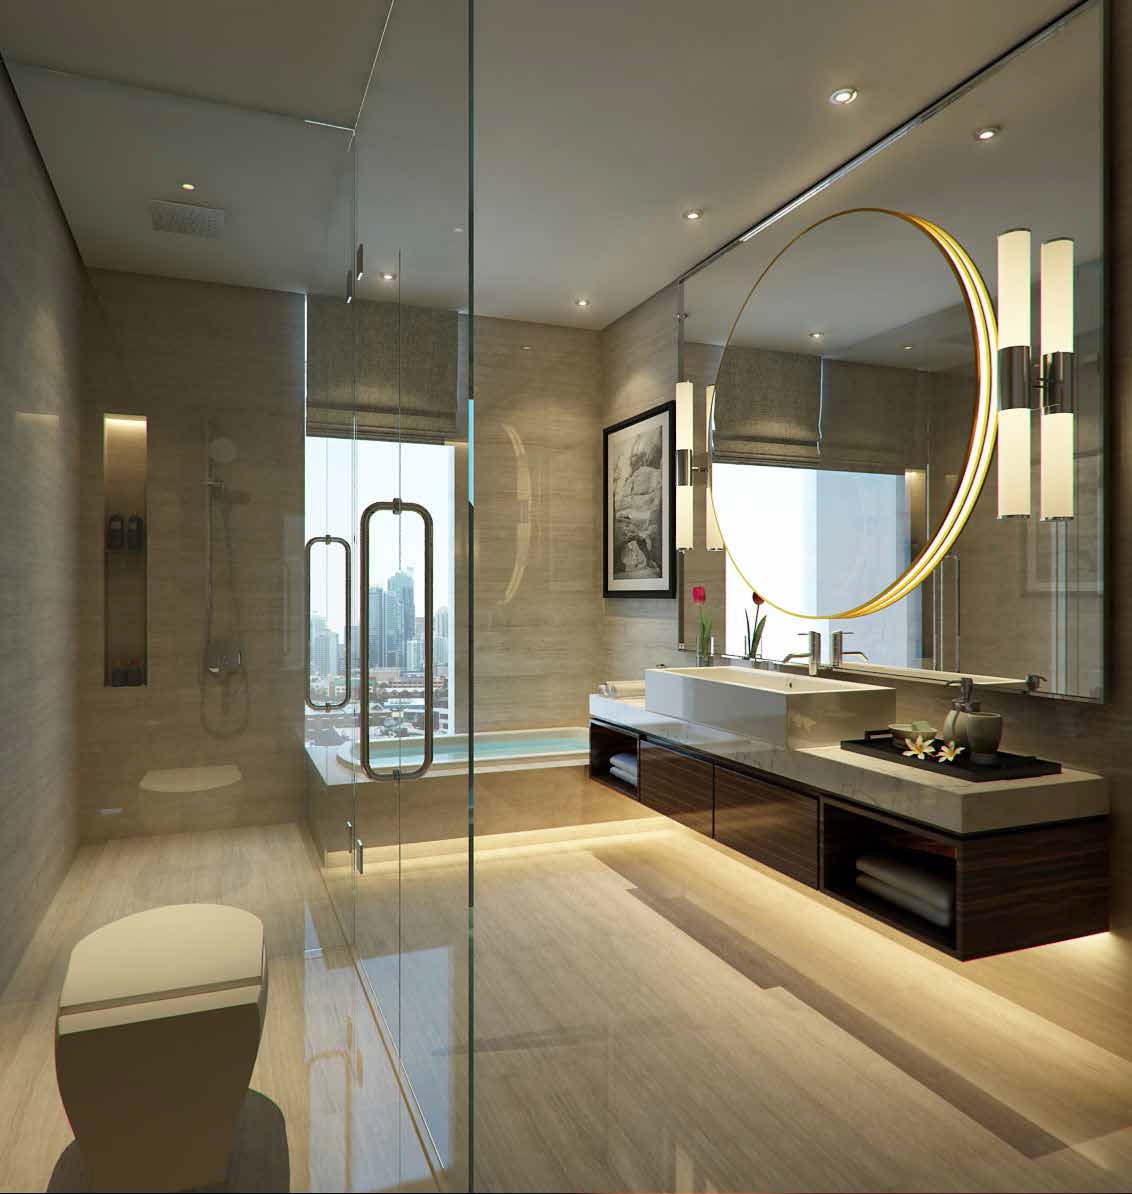 The penthouse master bathroom